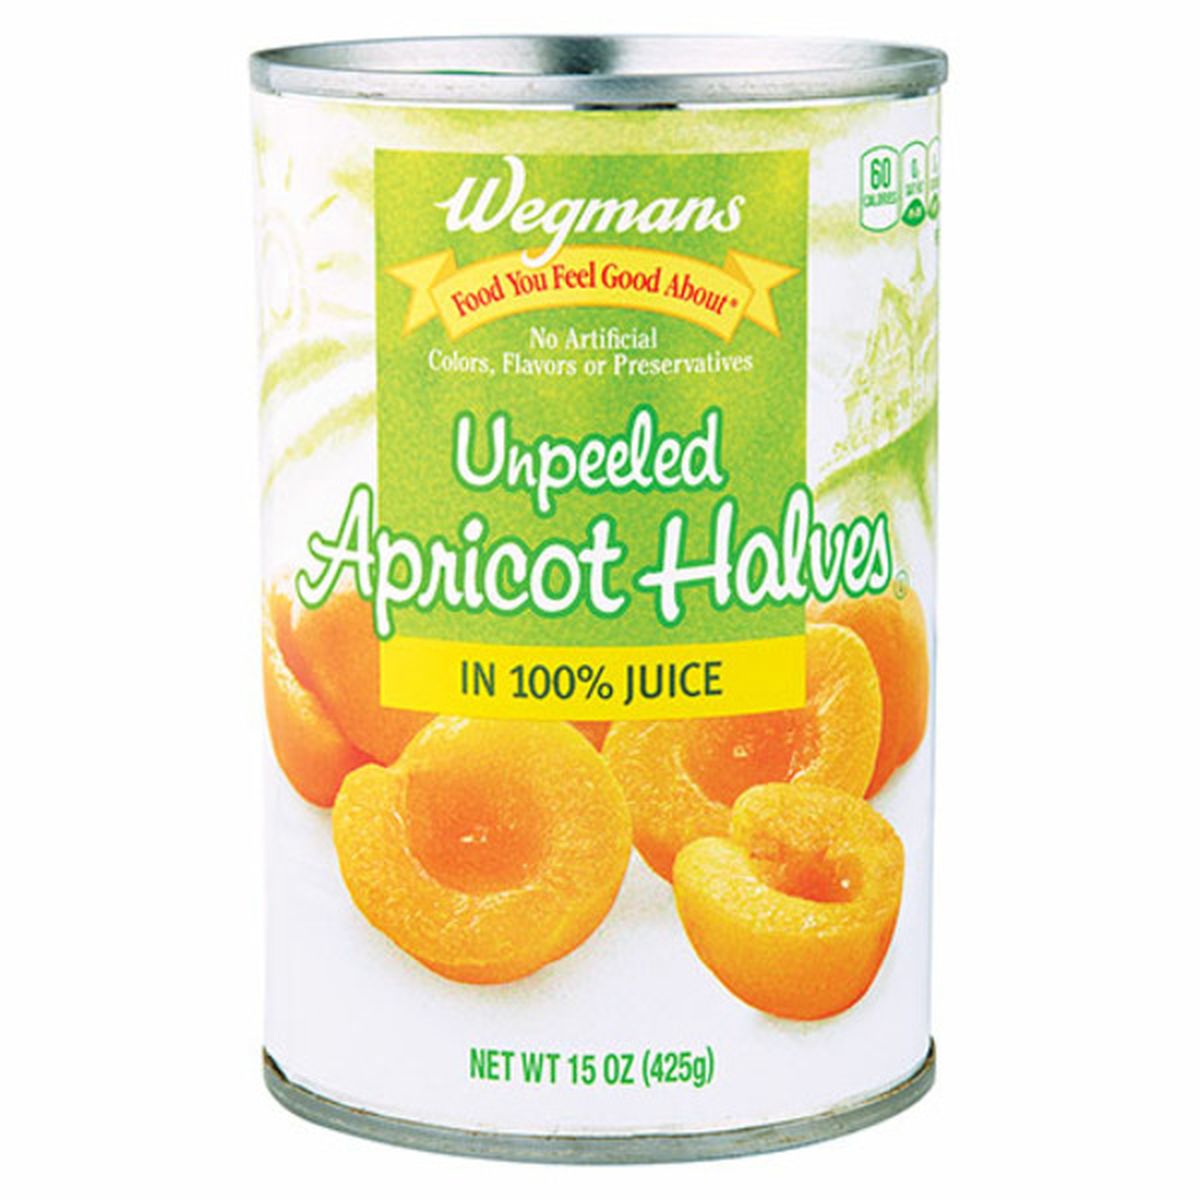 Calories in Wegmans Unpeeled Apricot Halves in 100% Juice